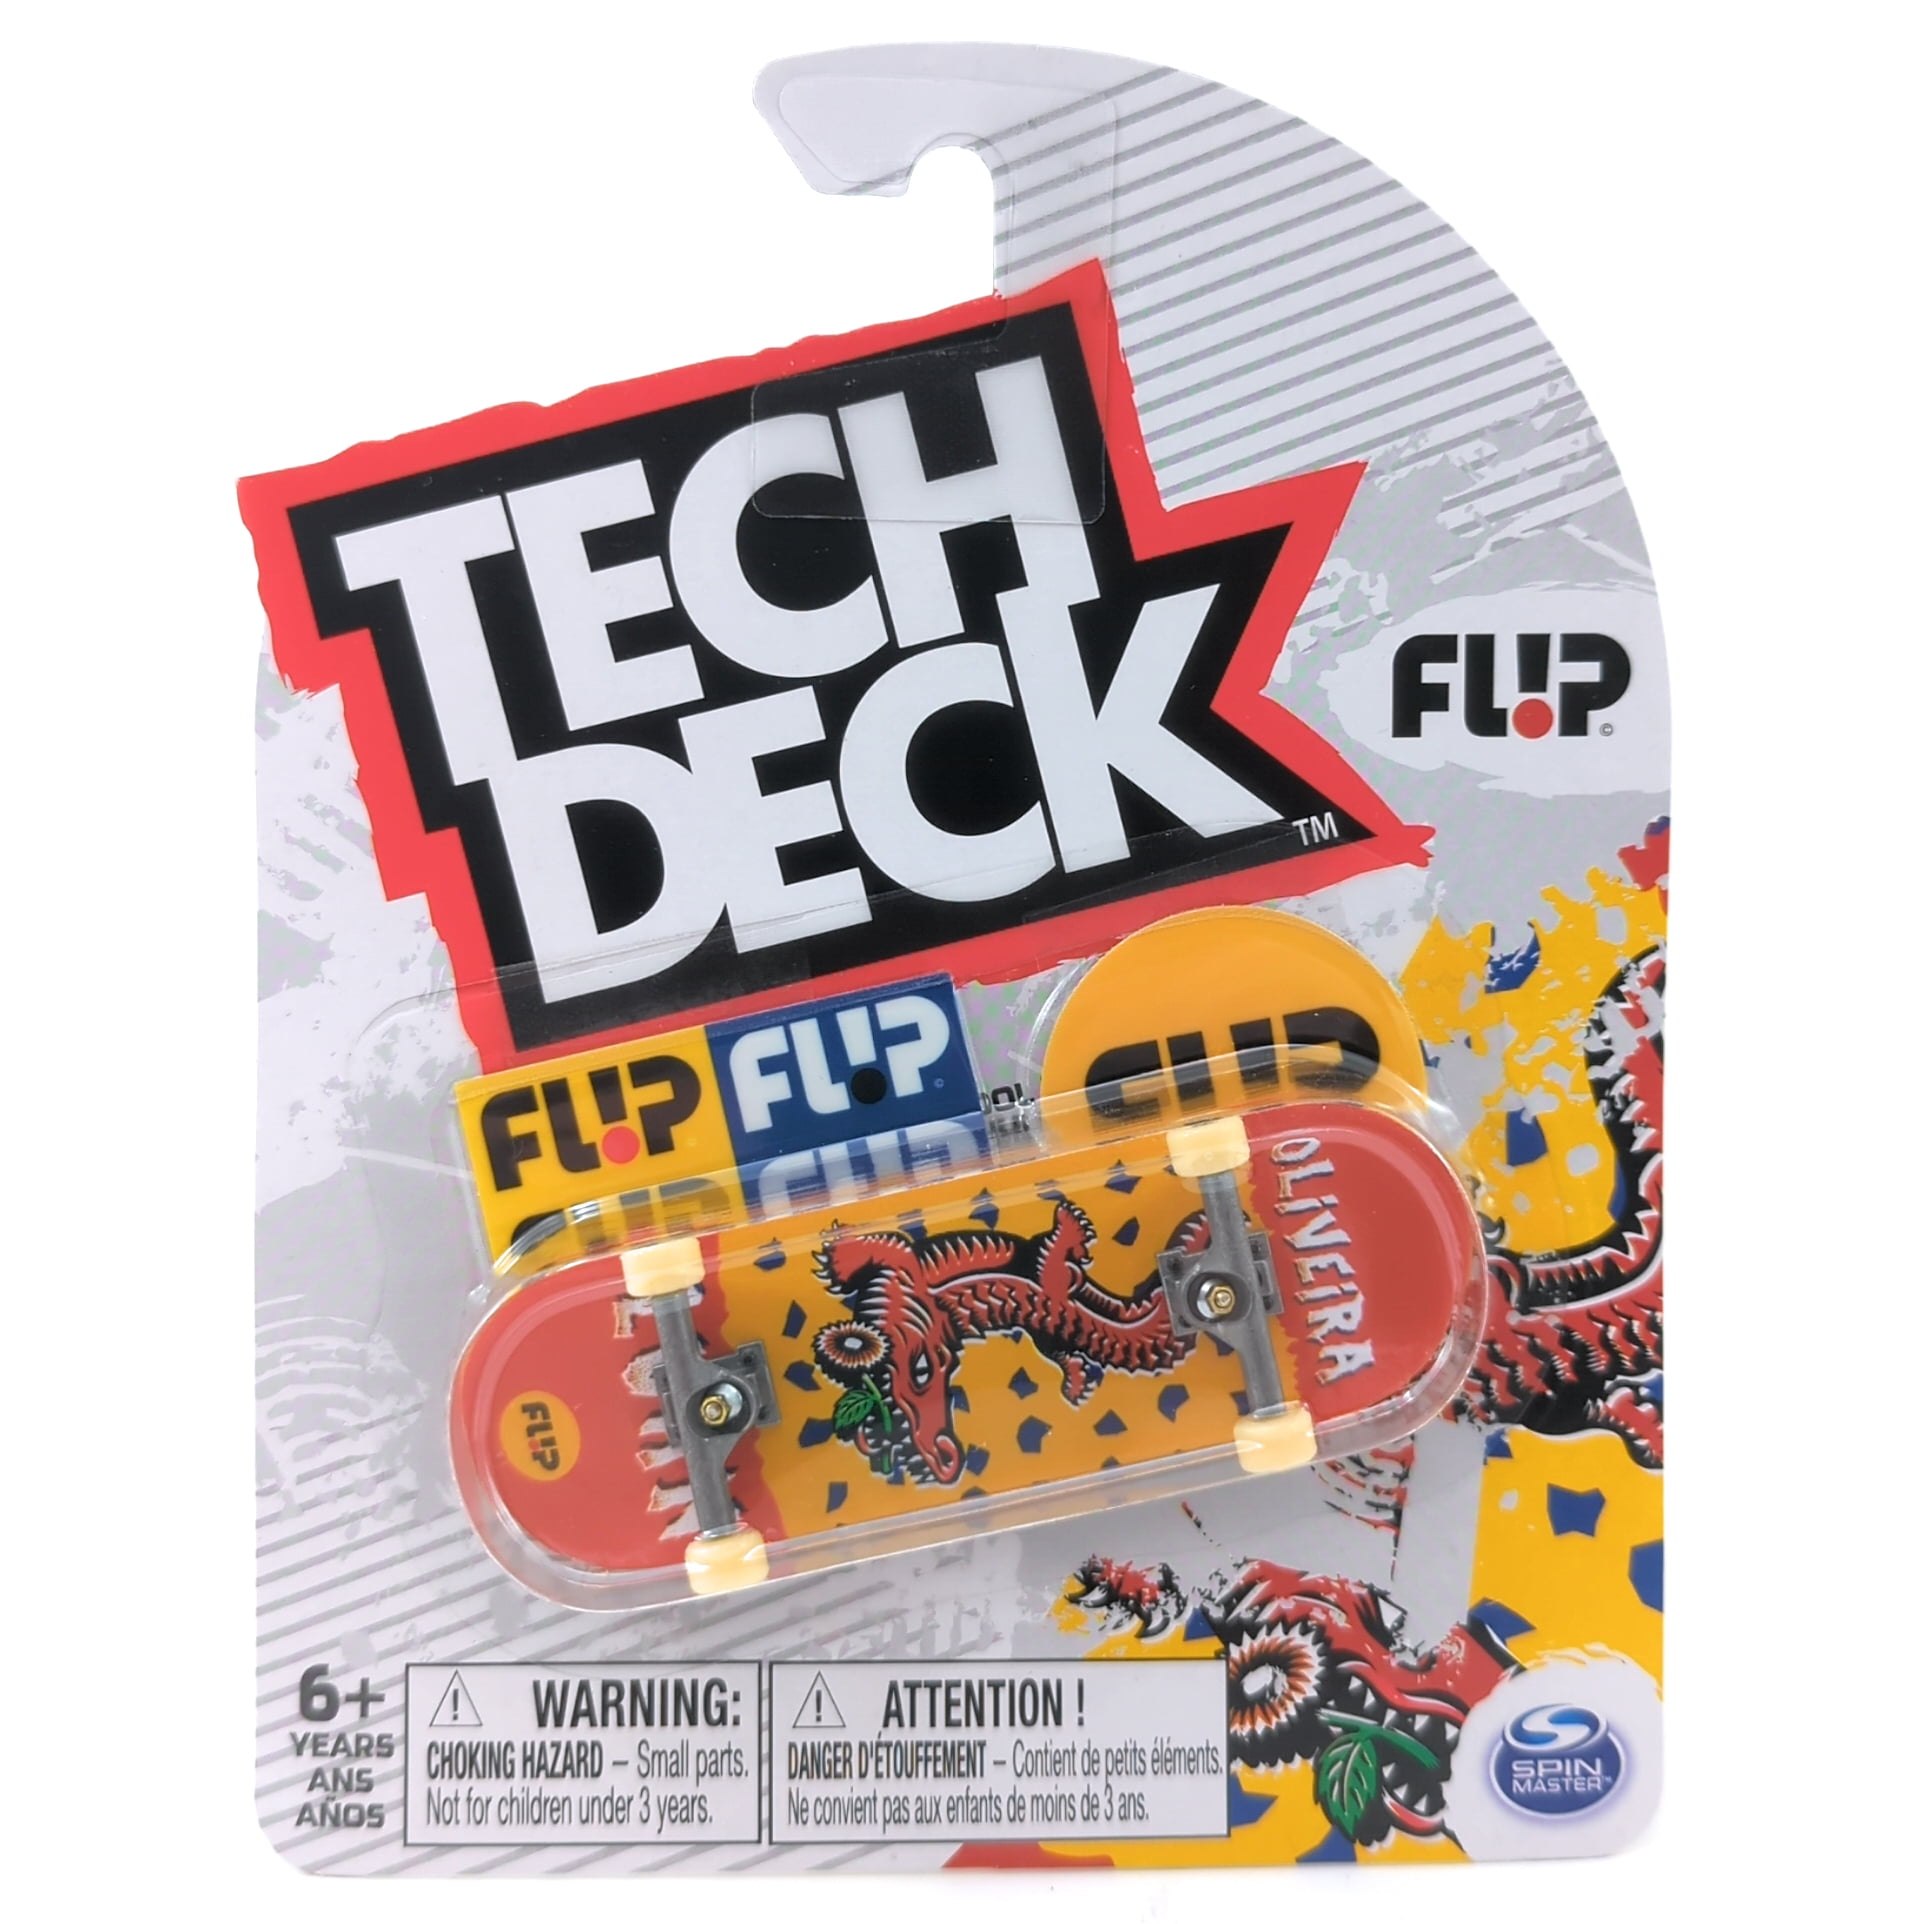 Mange farlige situationer fænomen grammatik Tech Deck Flip Skateboards Luan Oliveira Tin Toy Complete Fingerboard -  Walmart.com